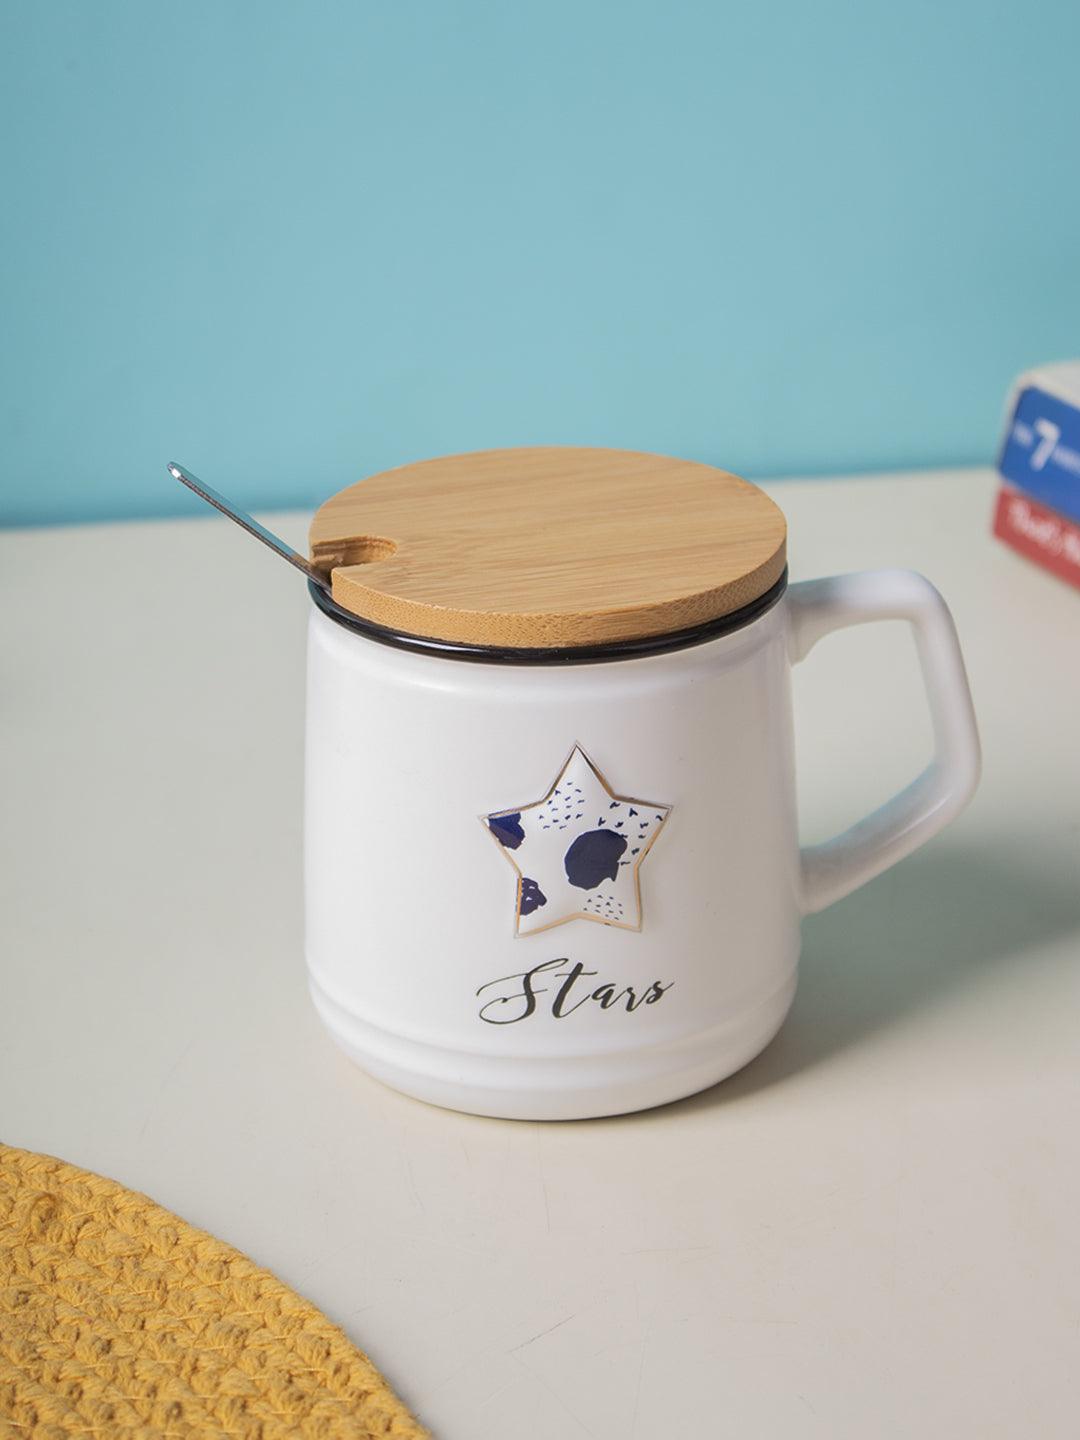 https://cdn.shopify.com/s/files/1/0267/1699/5754/files/star-ceramic-coffee-mug-with-lid-350-ml-stirring-spoon-mugs-1.jpg?v=1697015534&width=1080